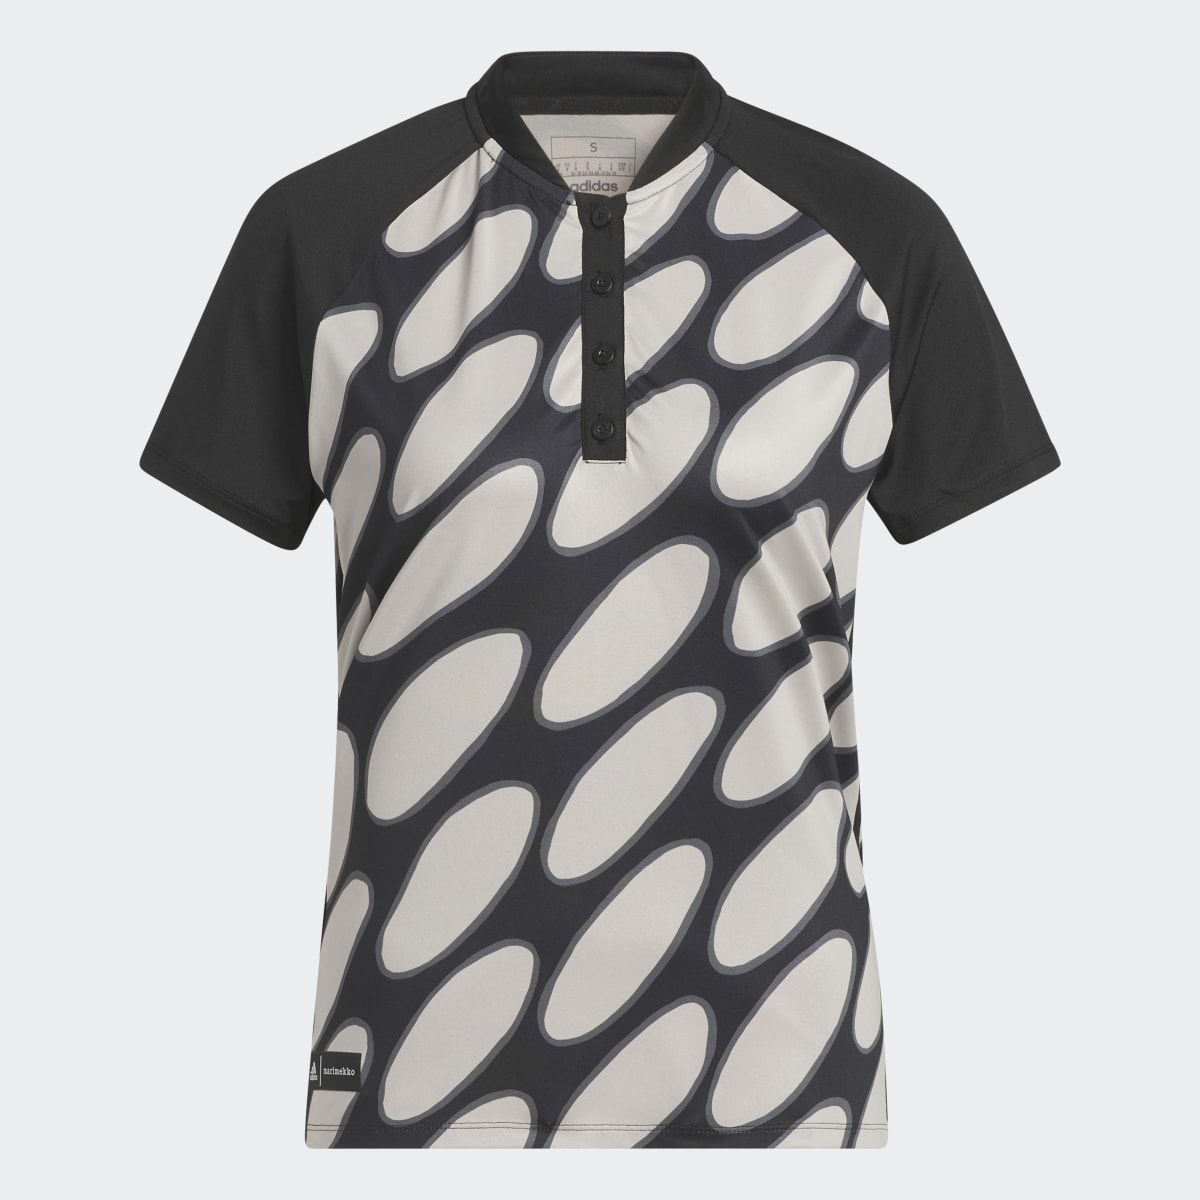 Adidas Marimekko Golf Polo Shirt. 5